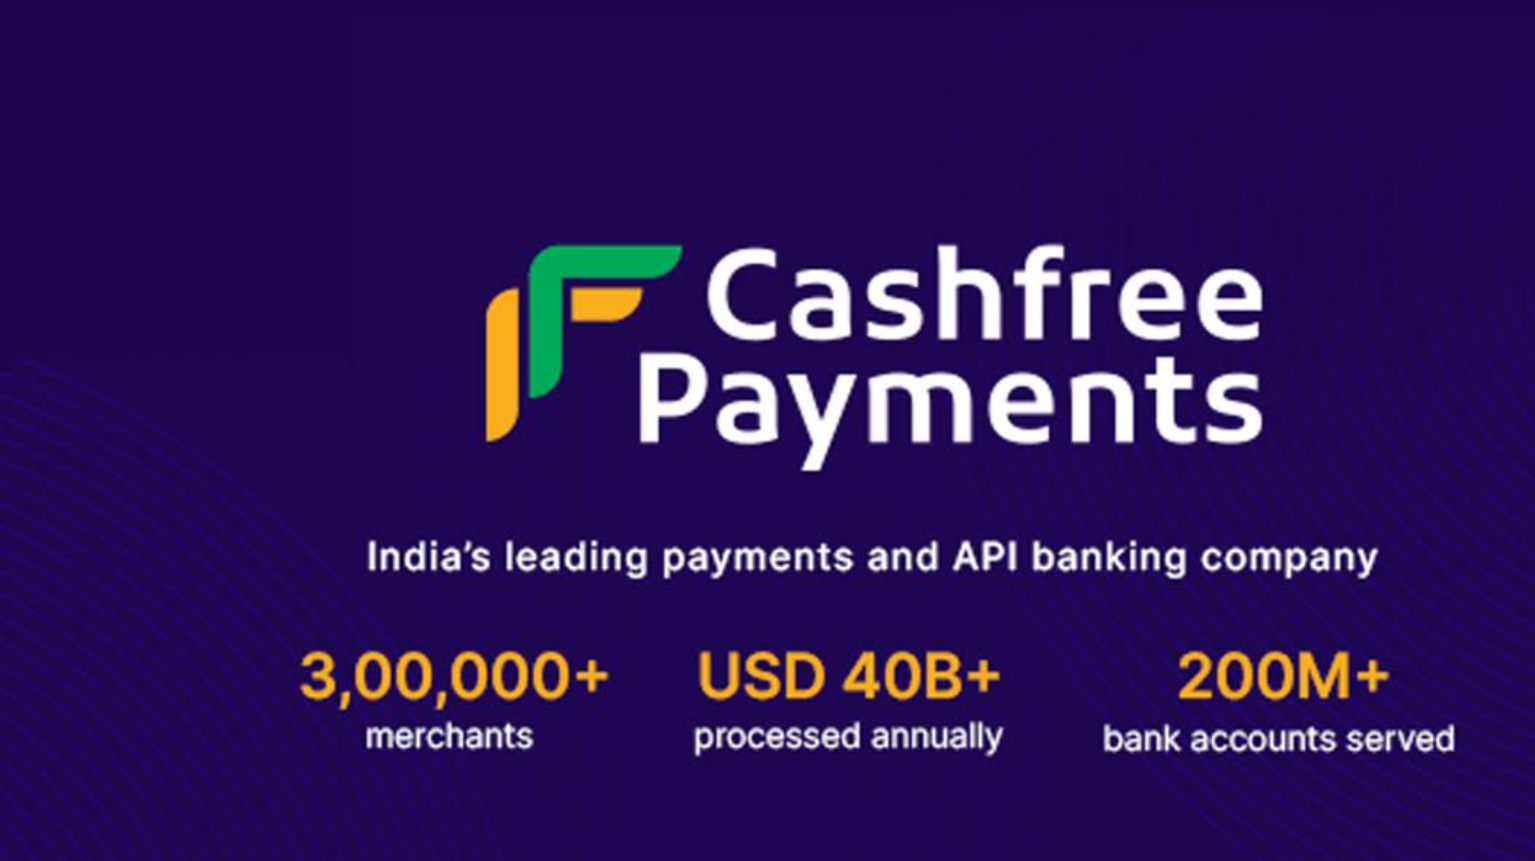 Cashfree Payments partners